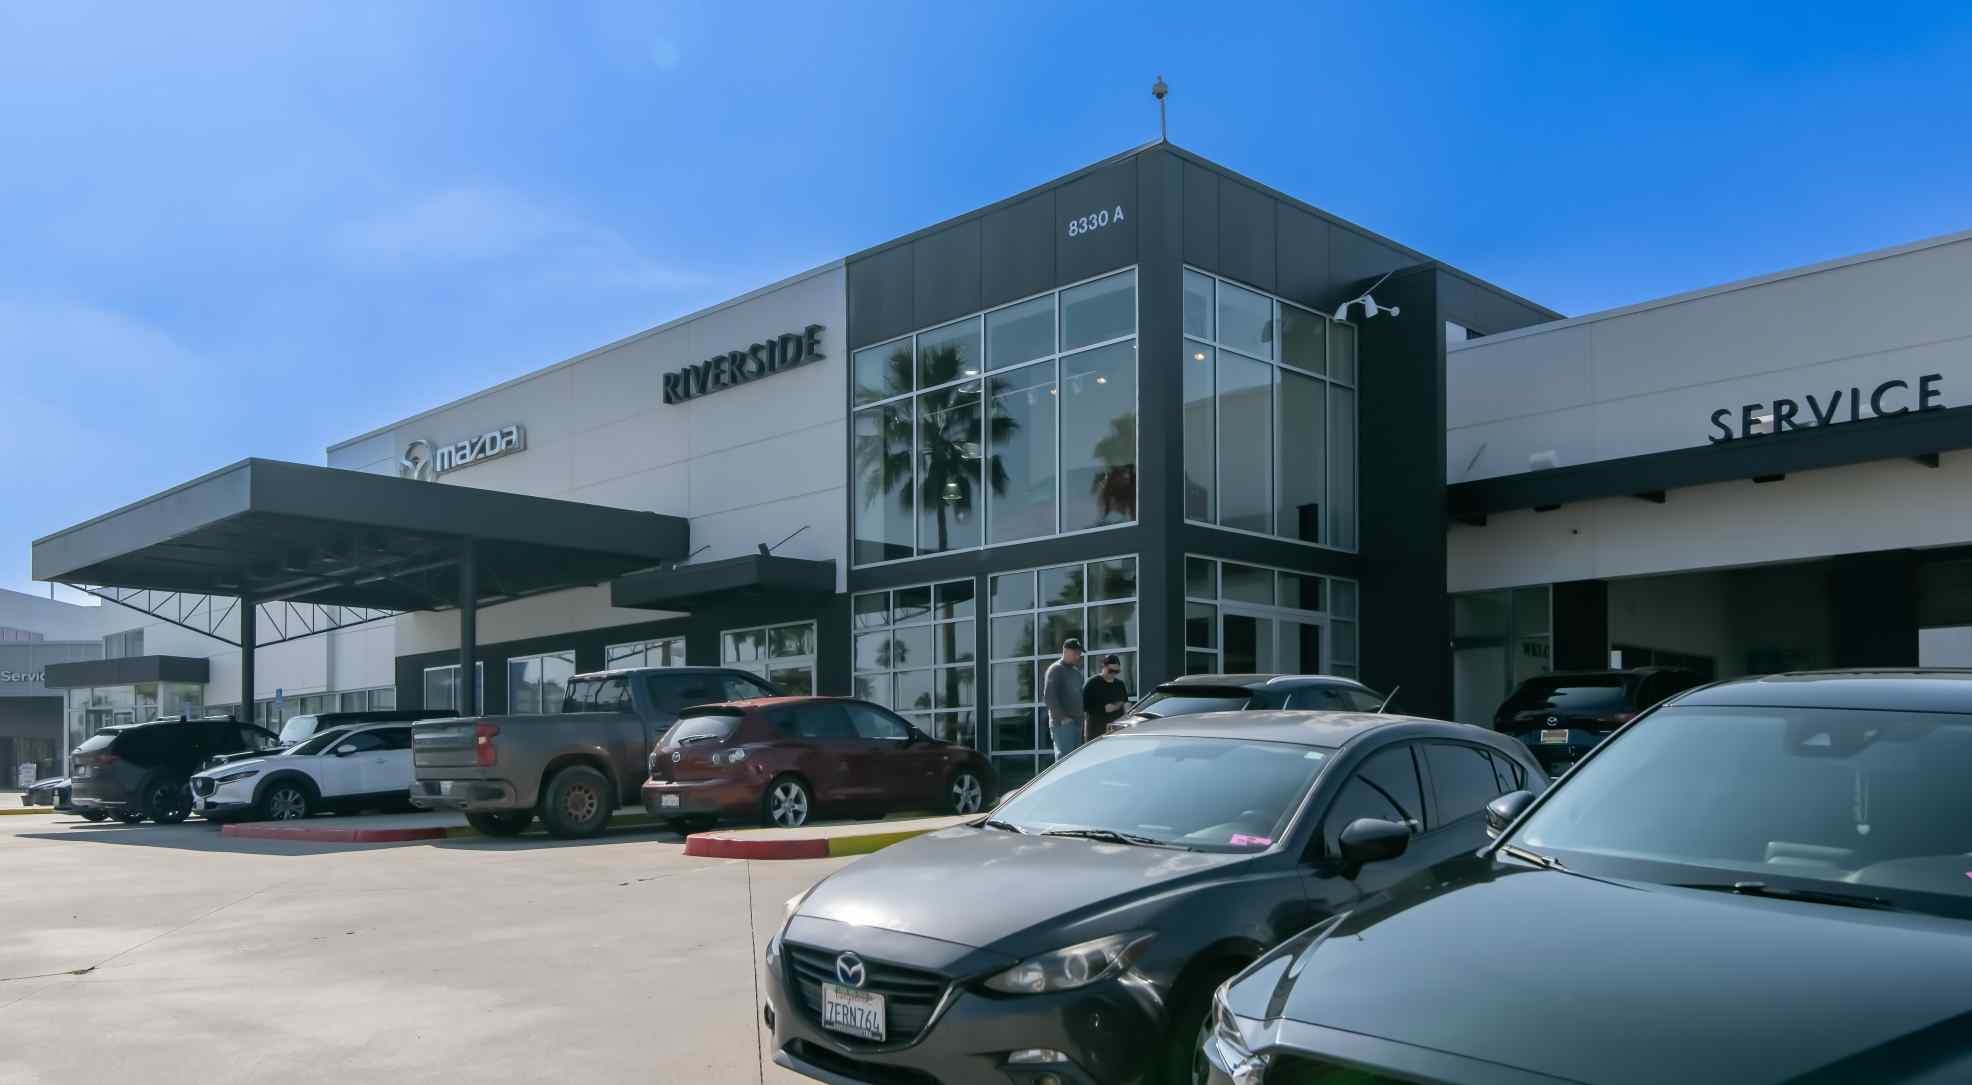 Riverside Mazda Gallery